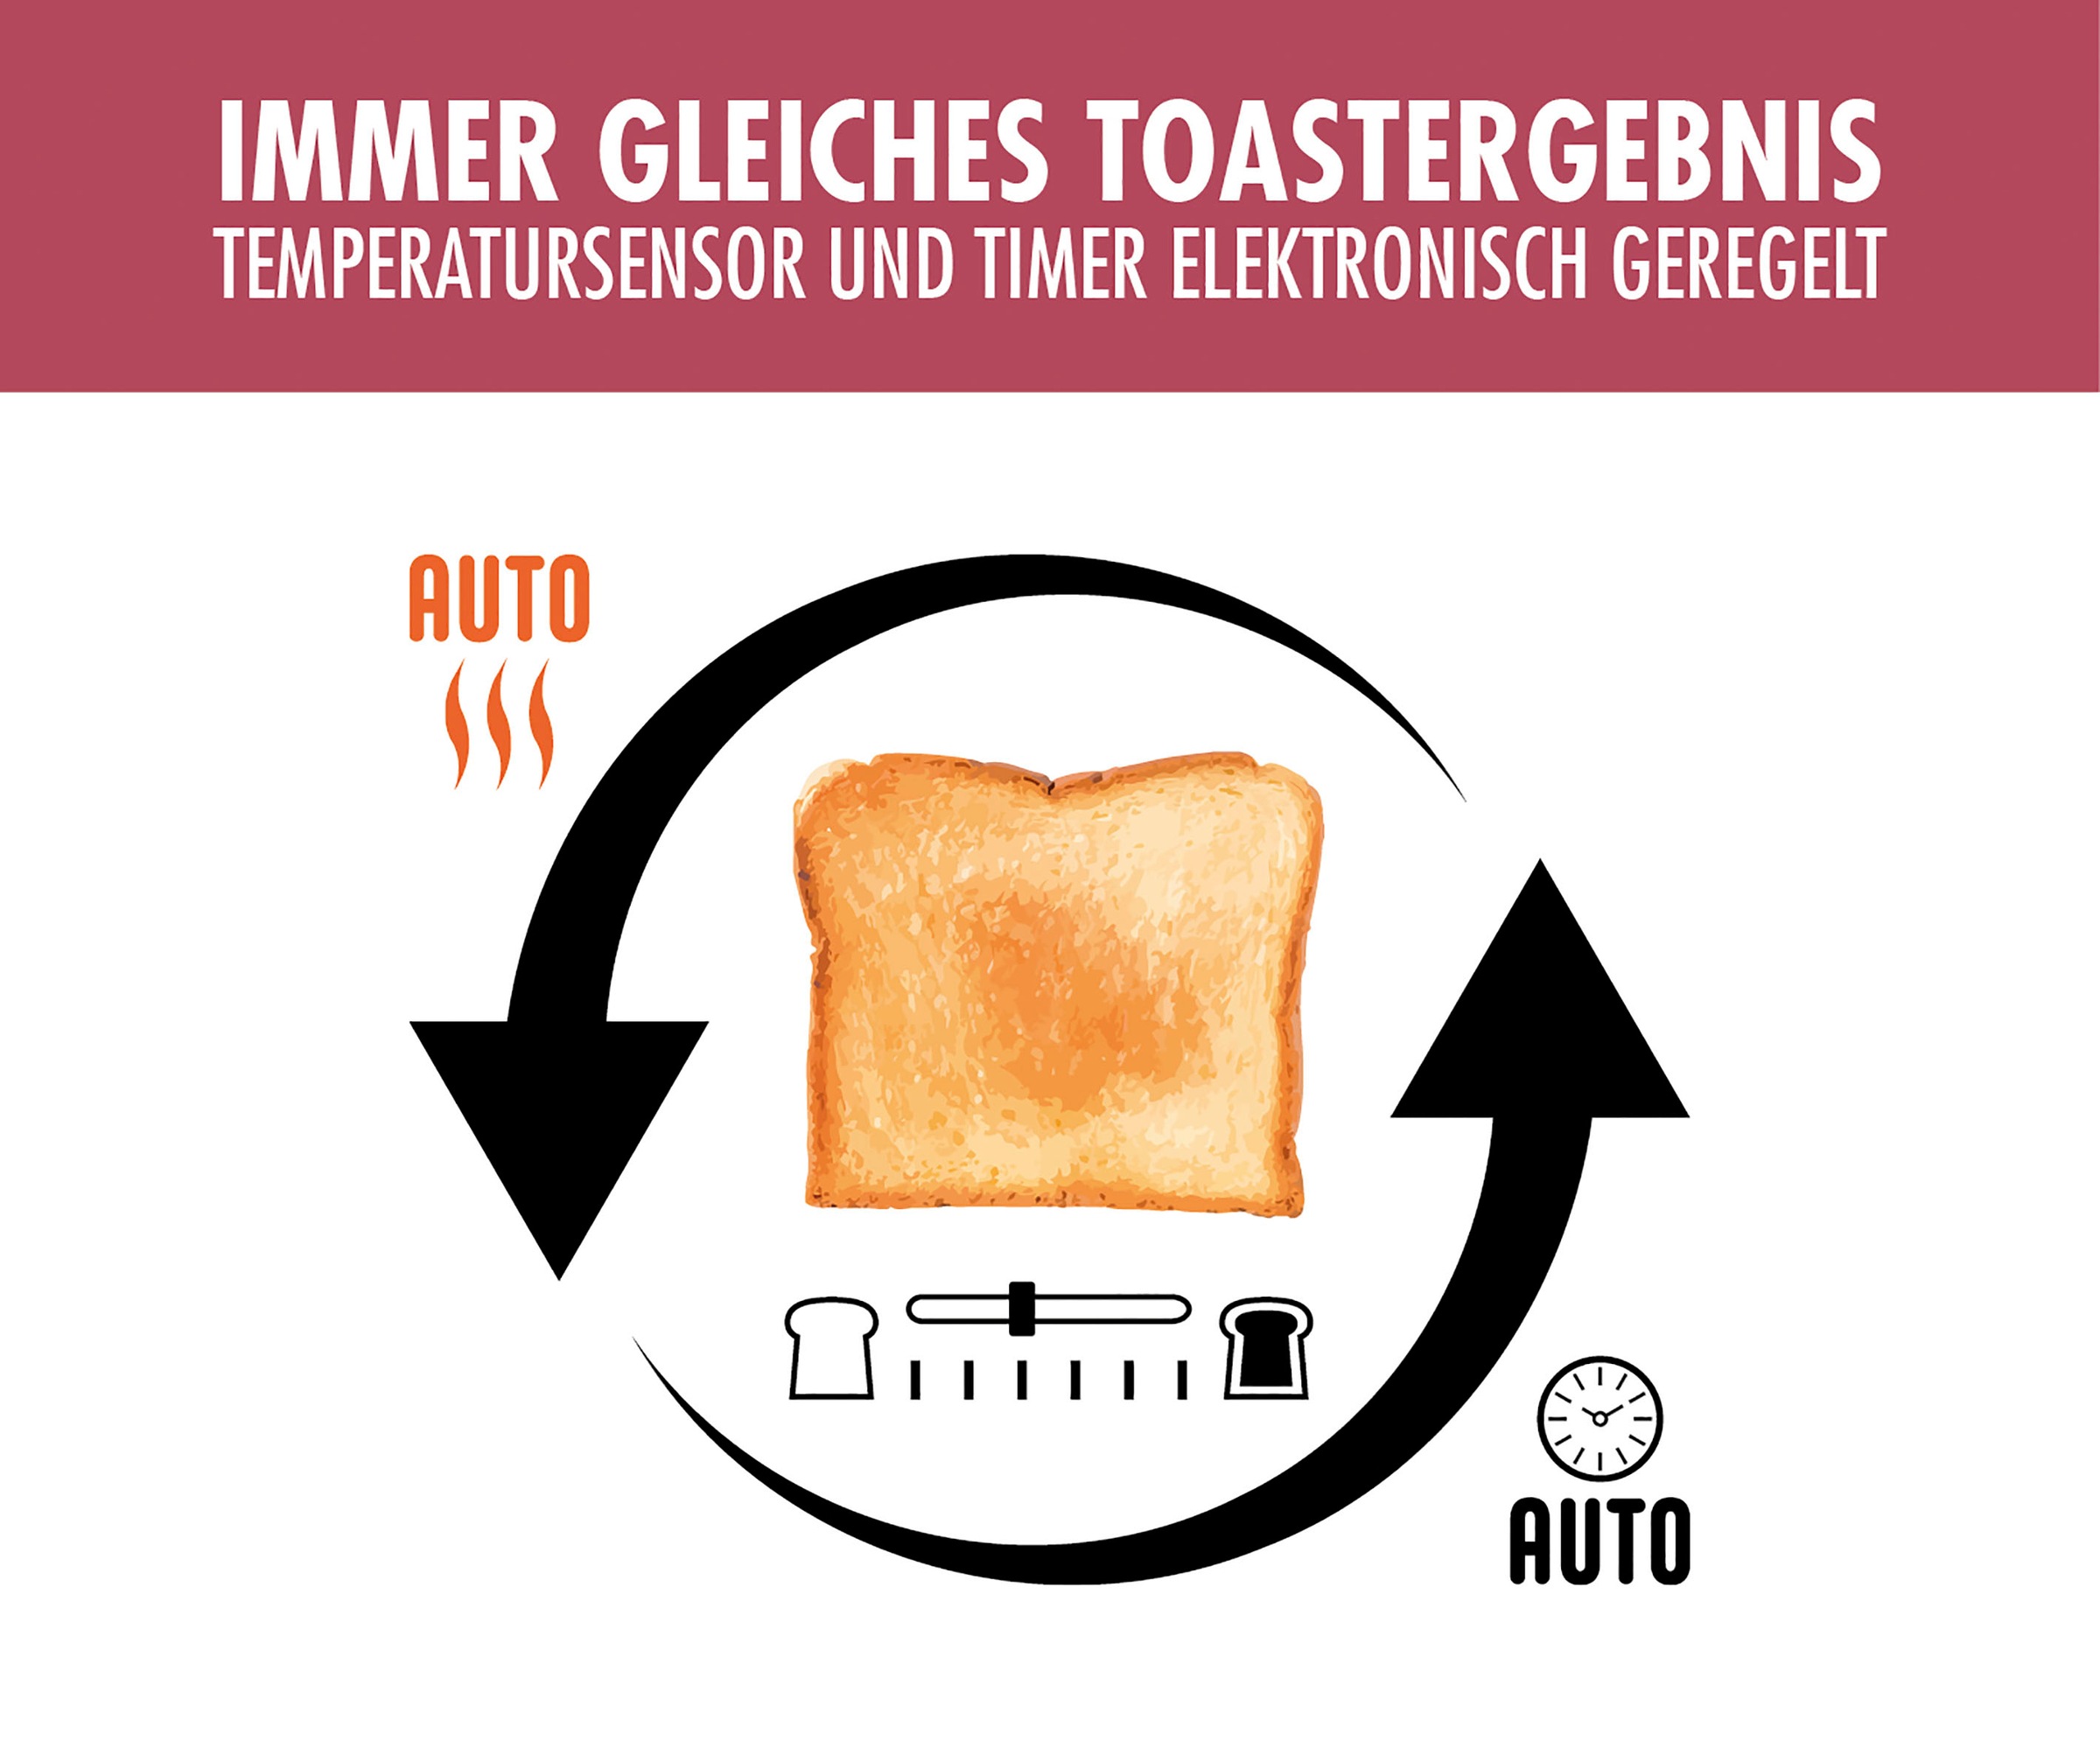 Gastroback Toaster »42394 Design Advanced 4S«, 1100 W